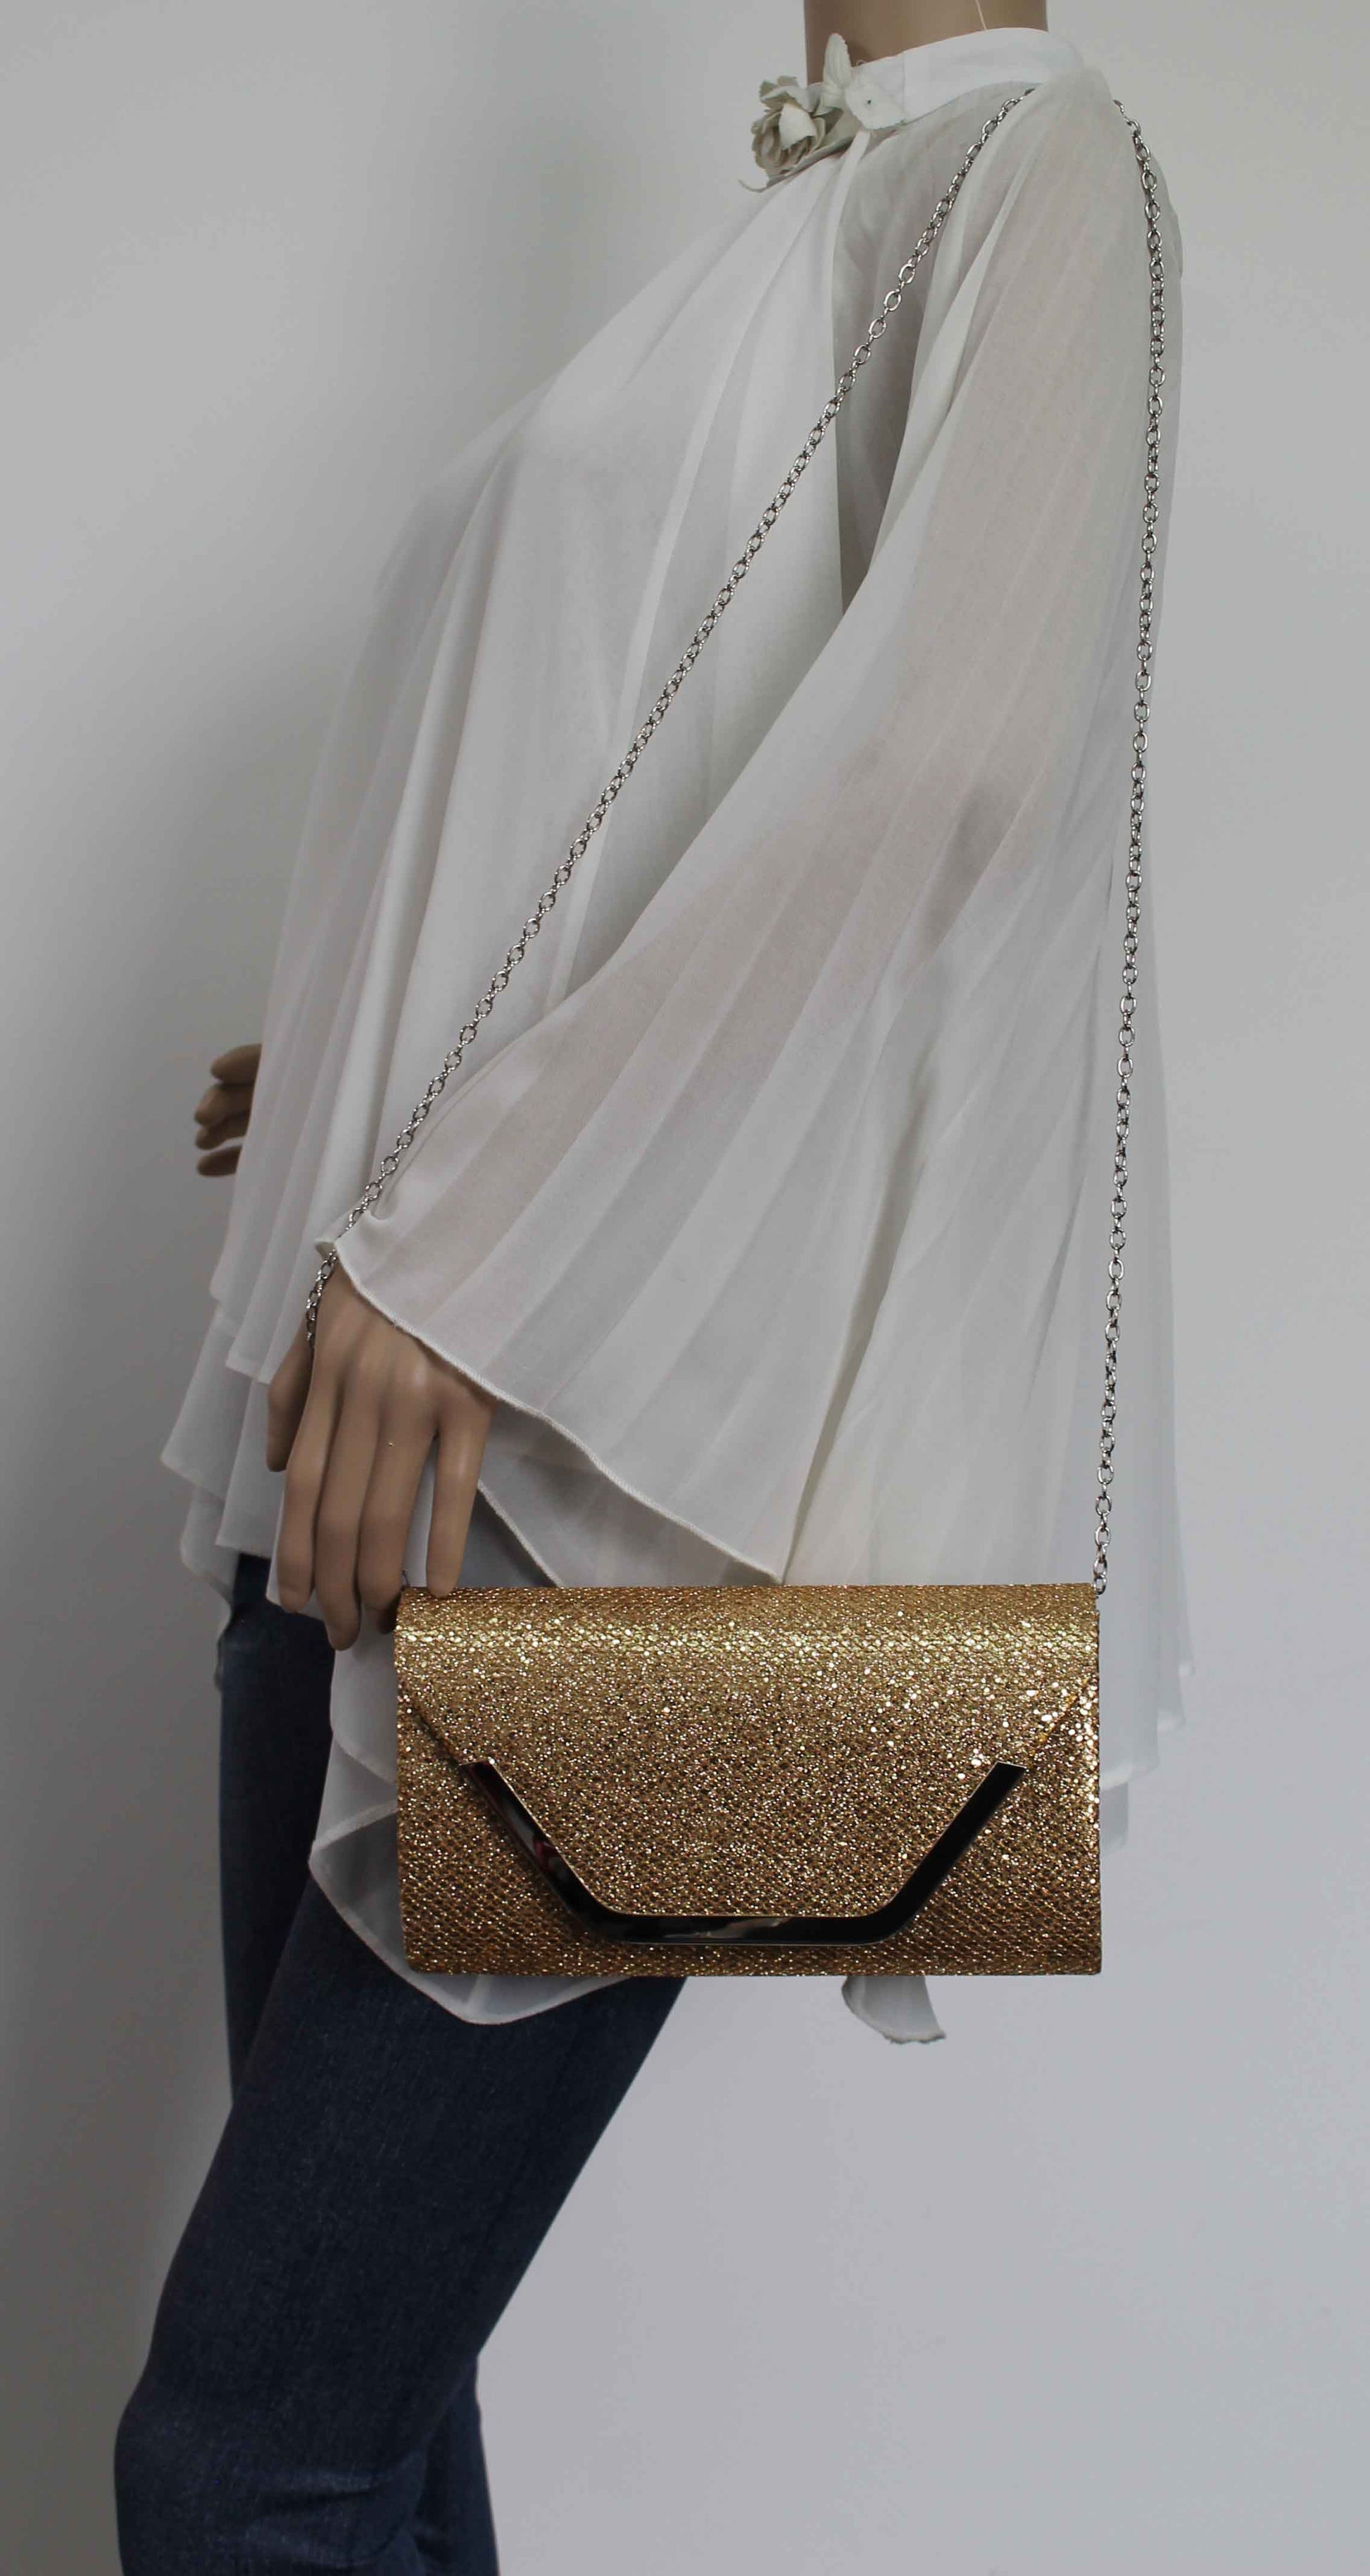 SWANKYSWANS Kamila Clutch Bag Gold Cute Cheap Clutch Bag For Weddings School and Work